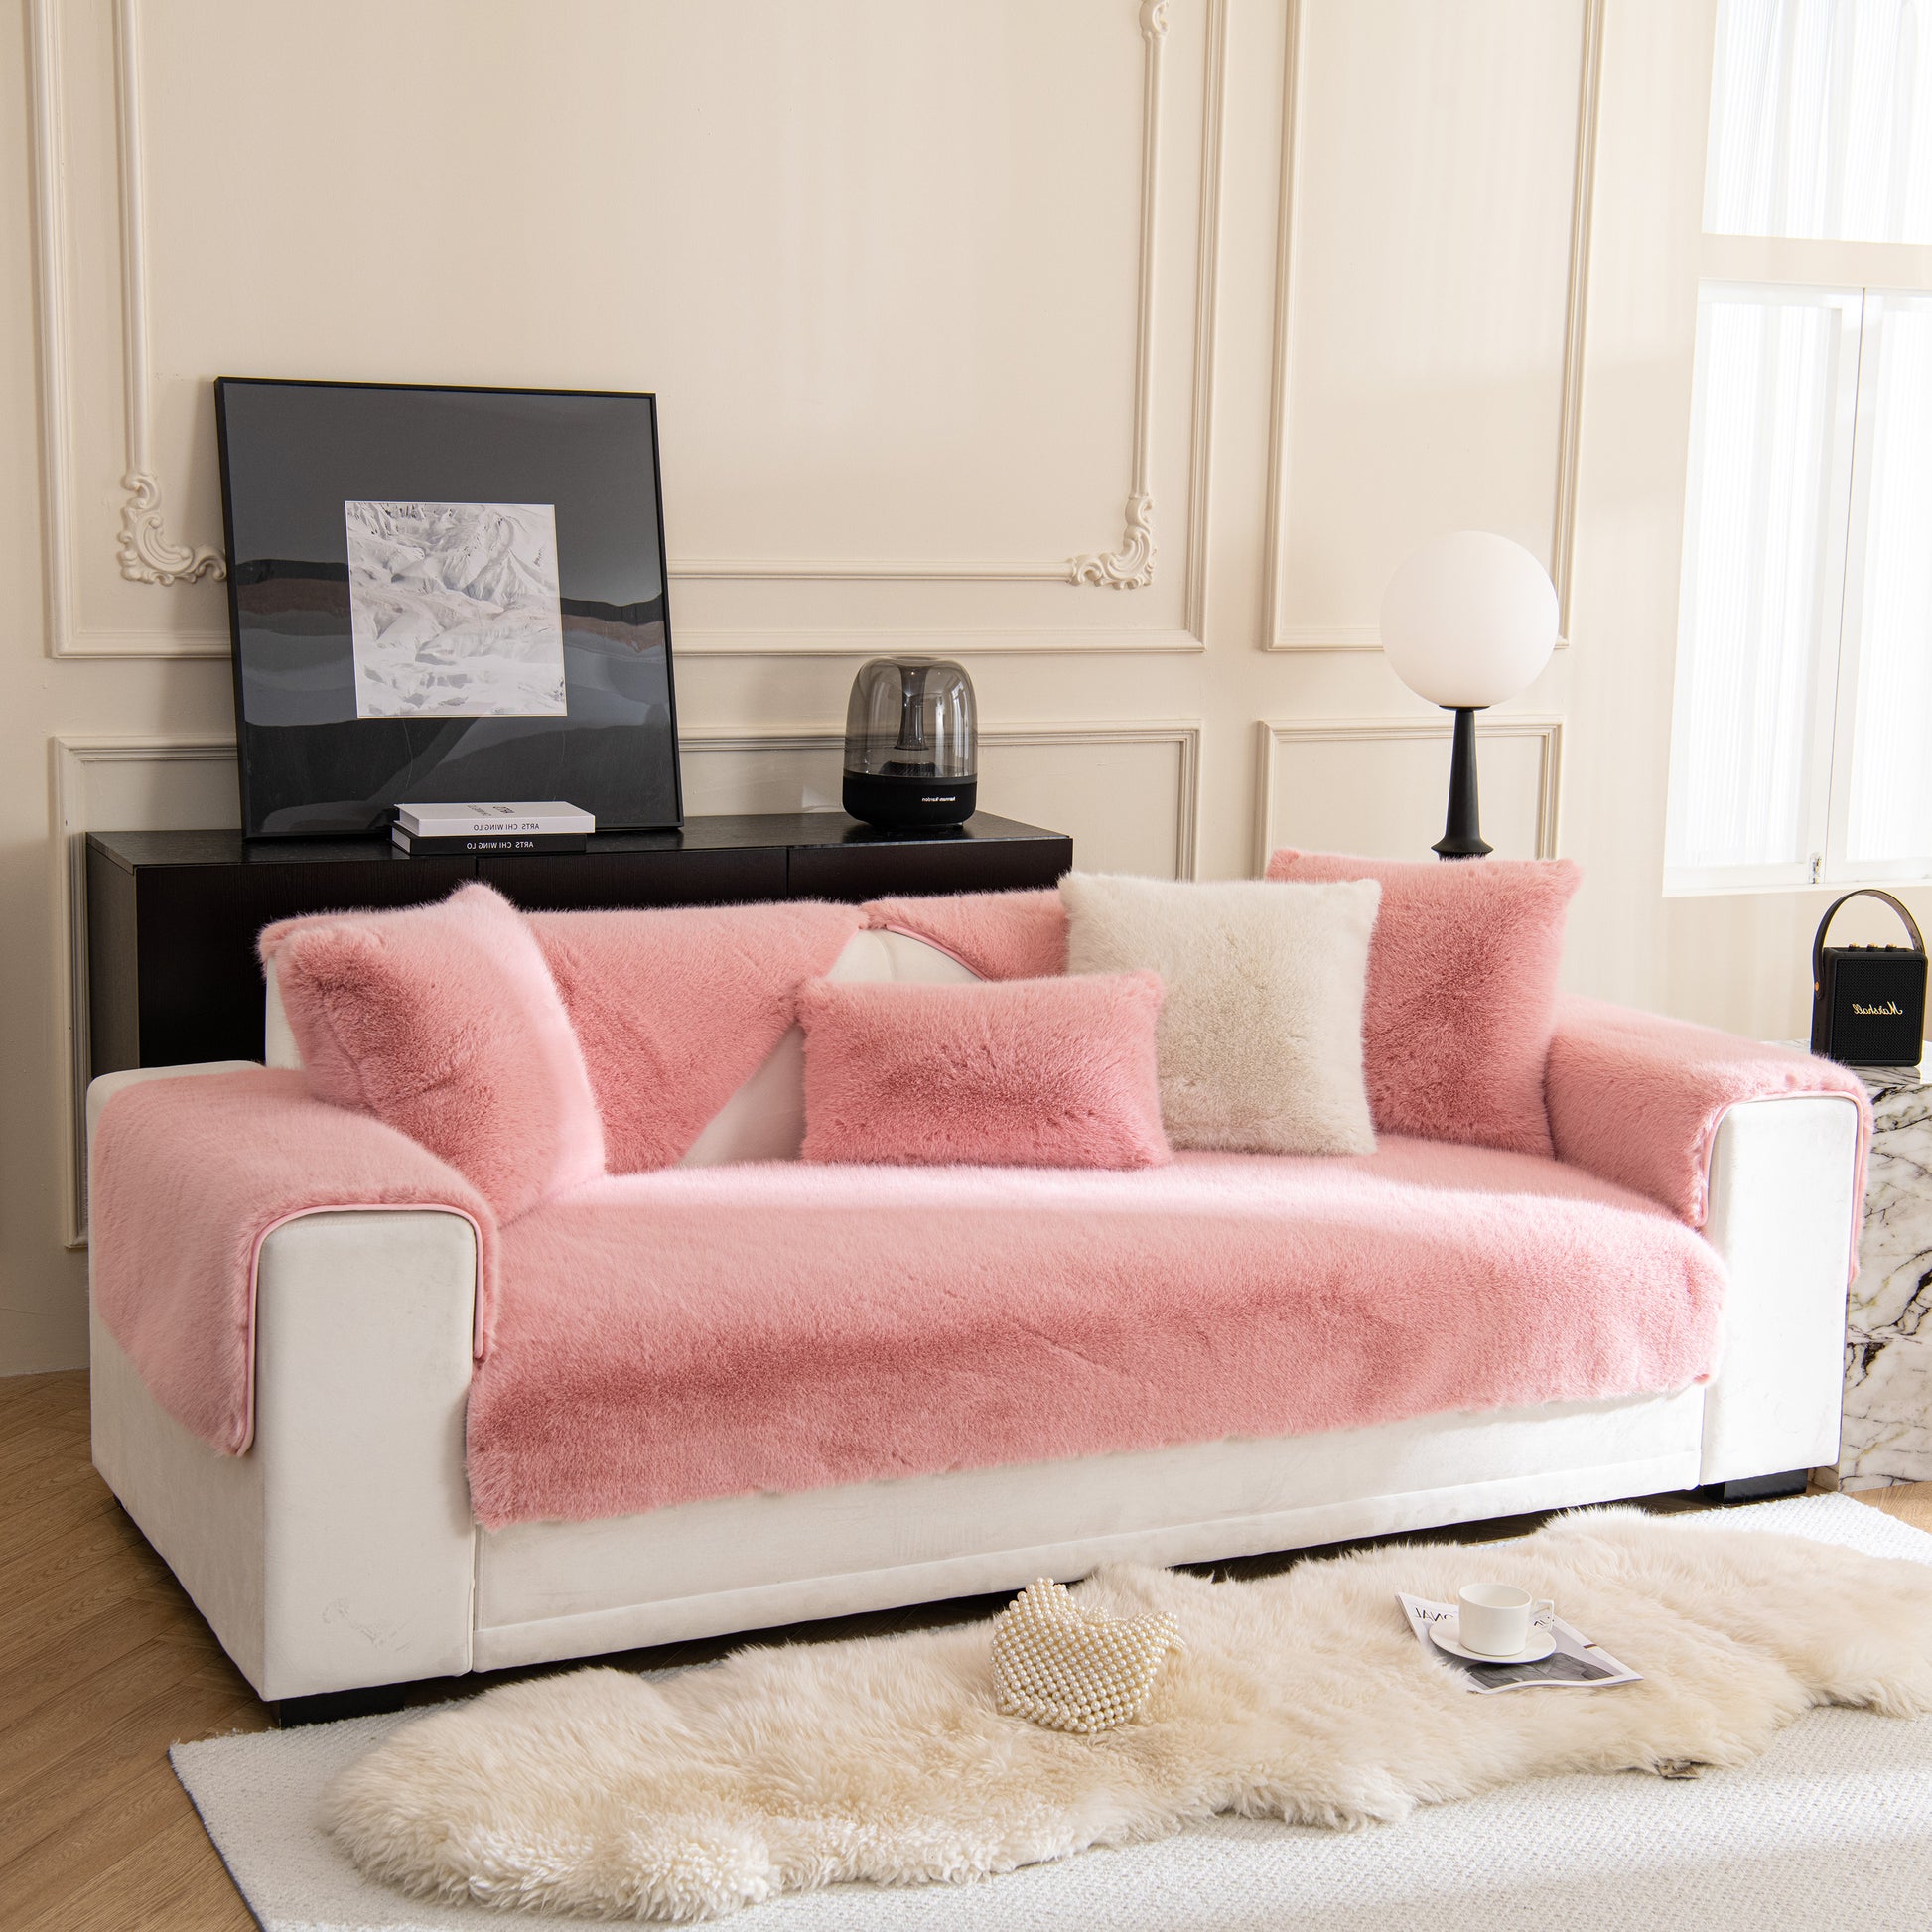 UMMH Plush Sofa Cover Winter Thickening Warm Plush Cushions Non